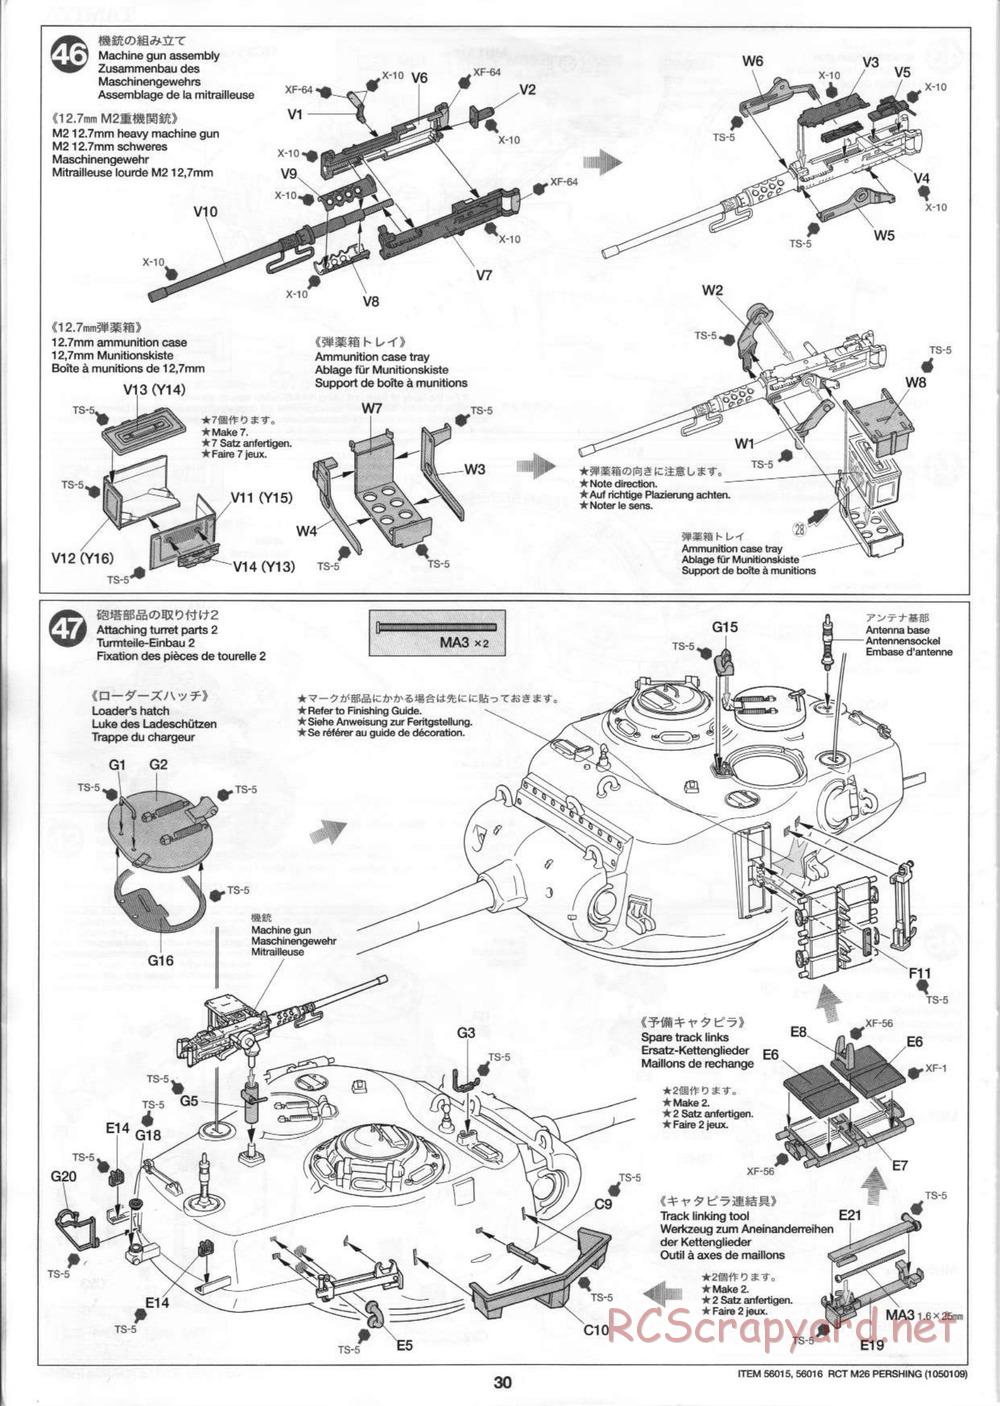 Tamiya - M26 Pershing - 1/16 Scale Chassis - Manual - Page 30